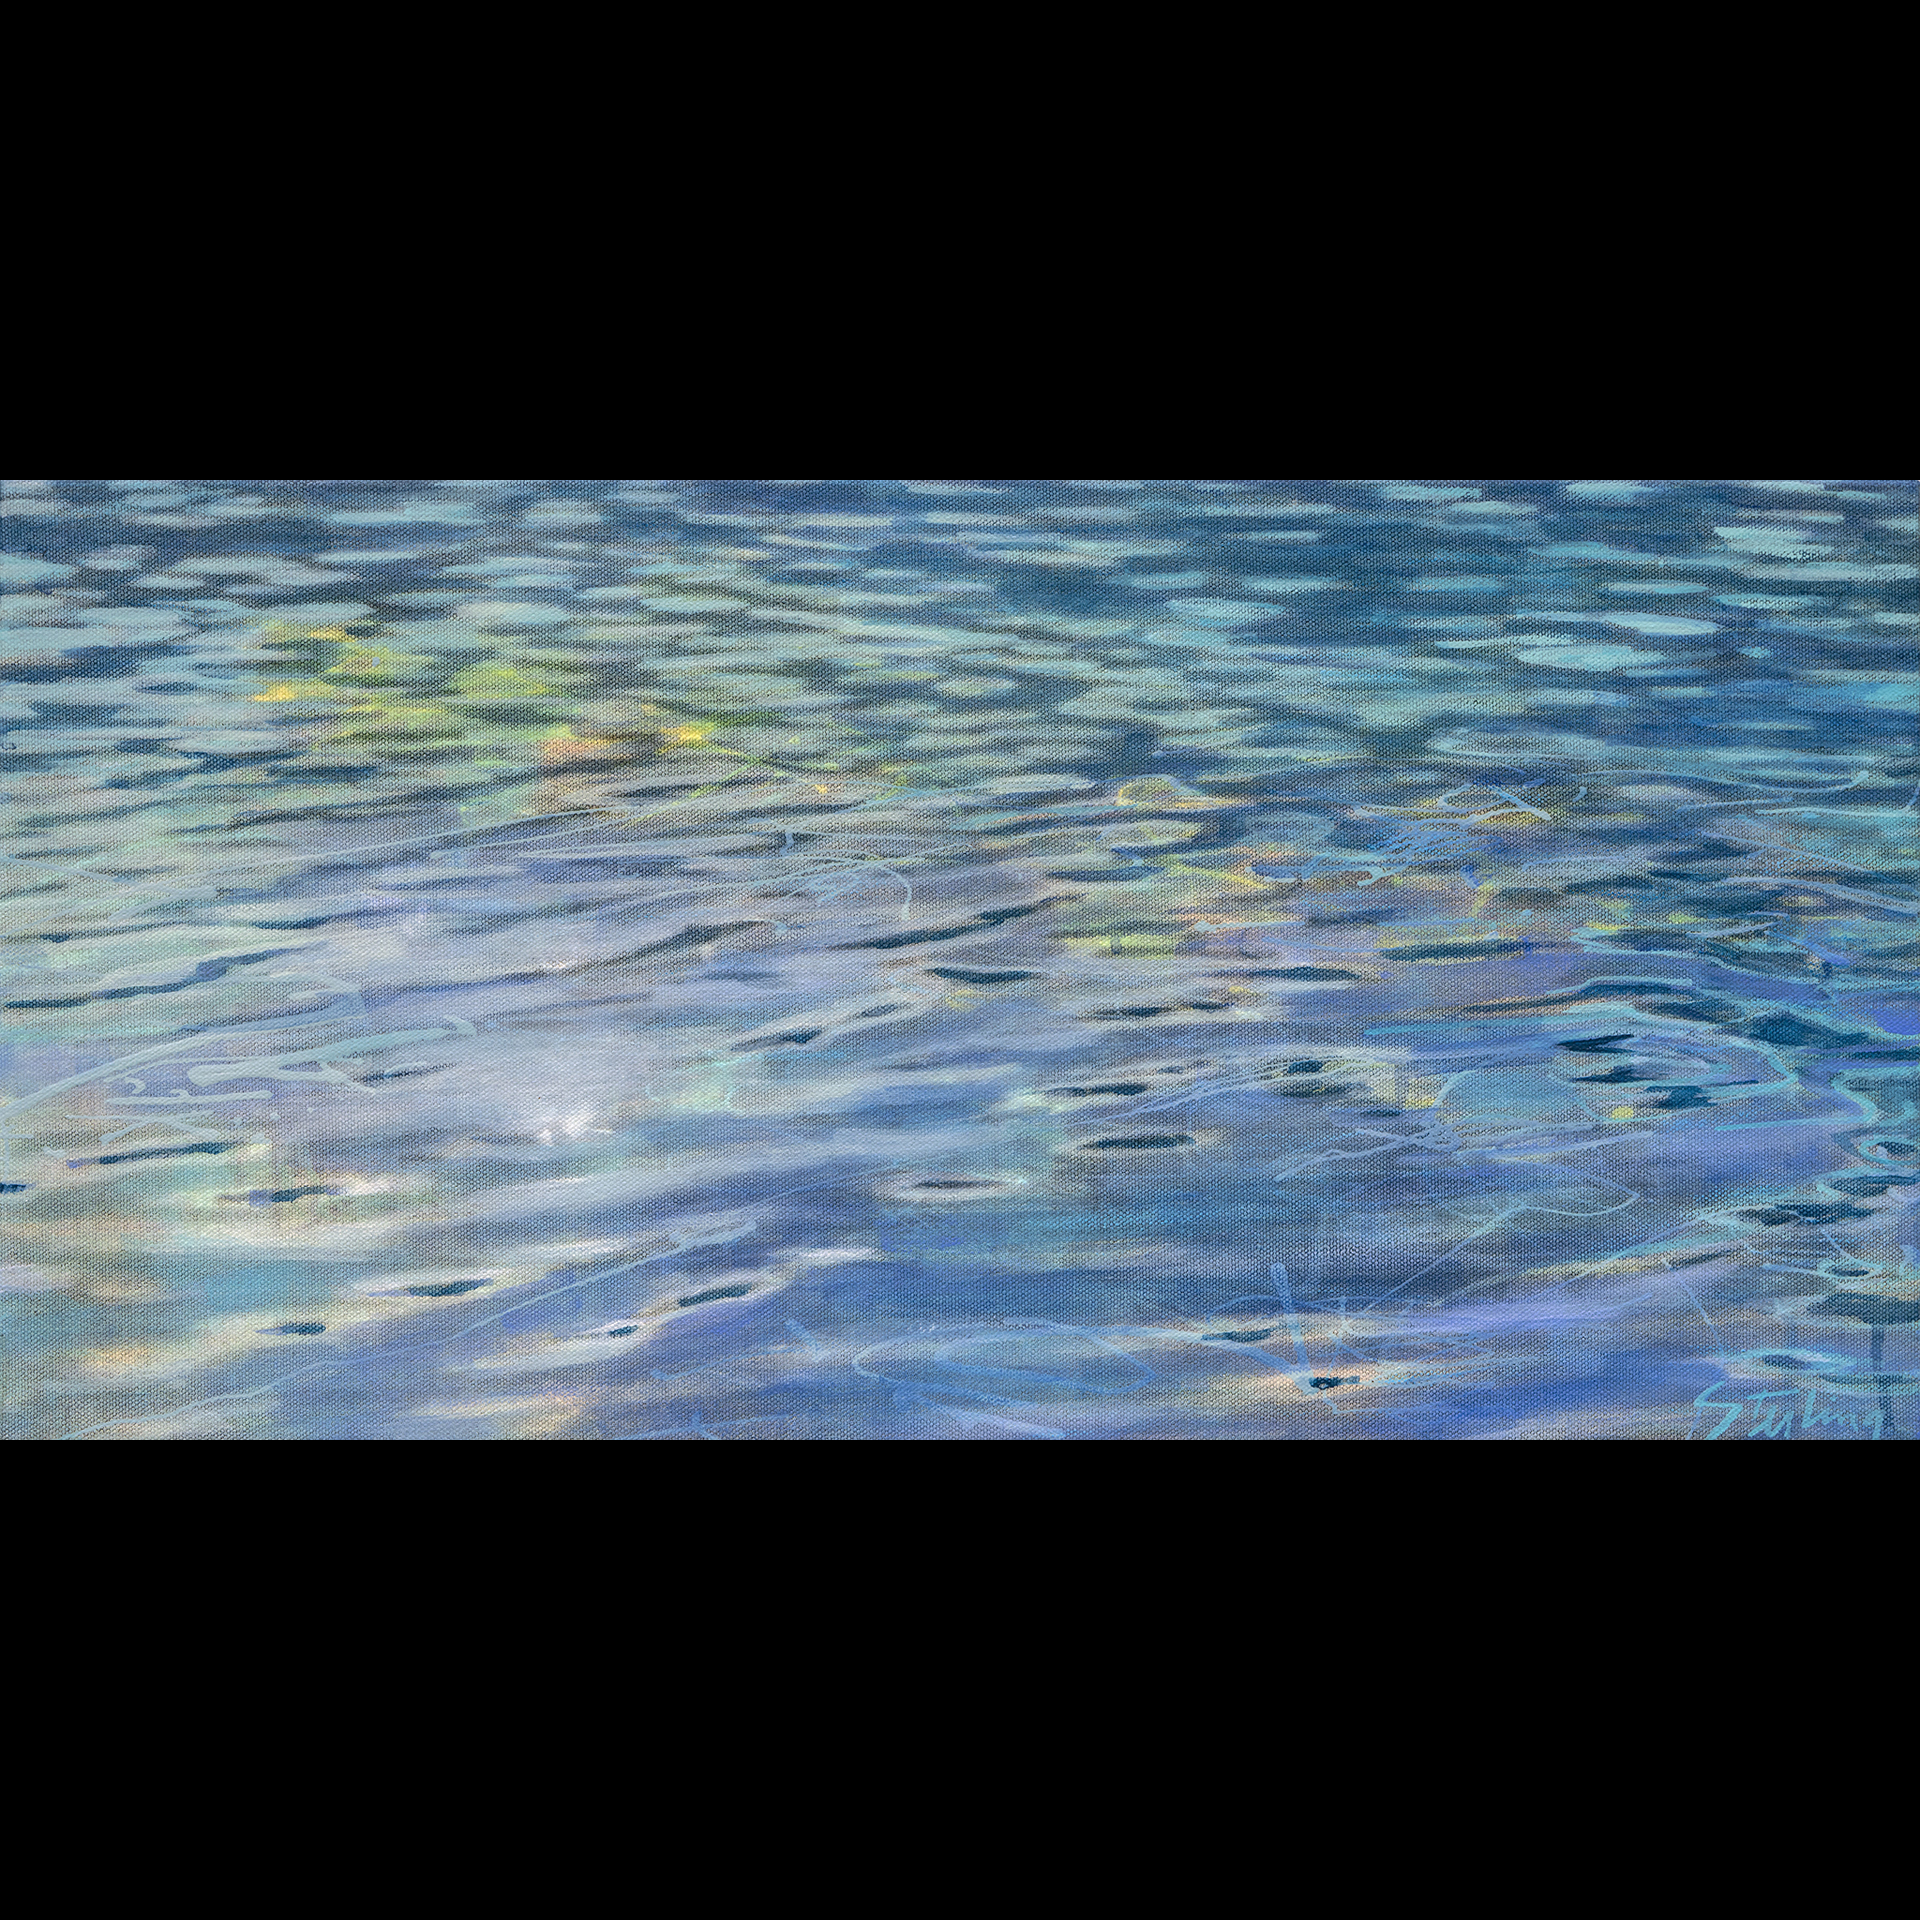 Moonlight Swim
acrylic on canvas
12x24 SOLD